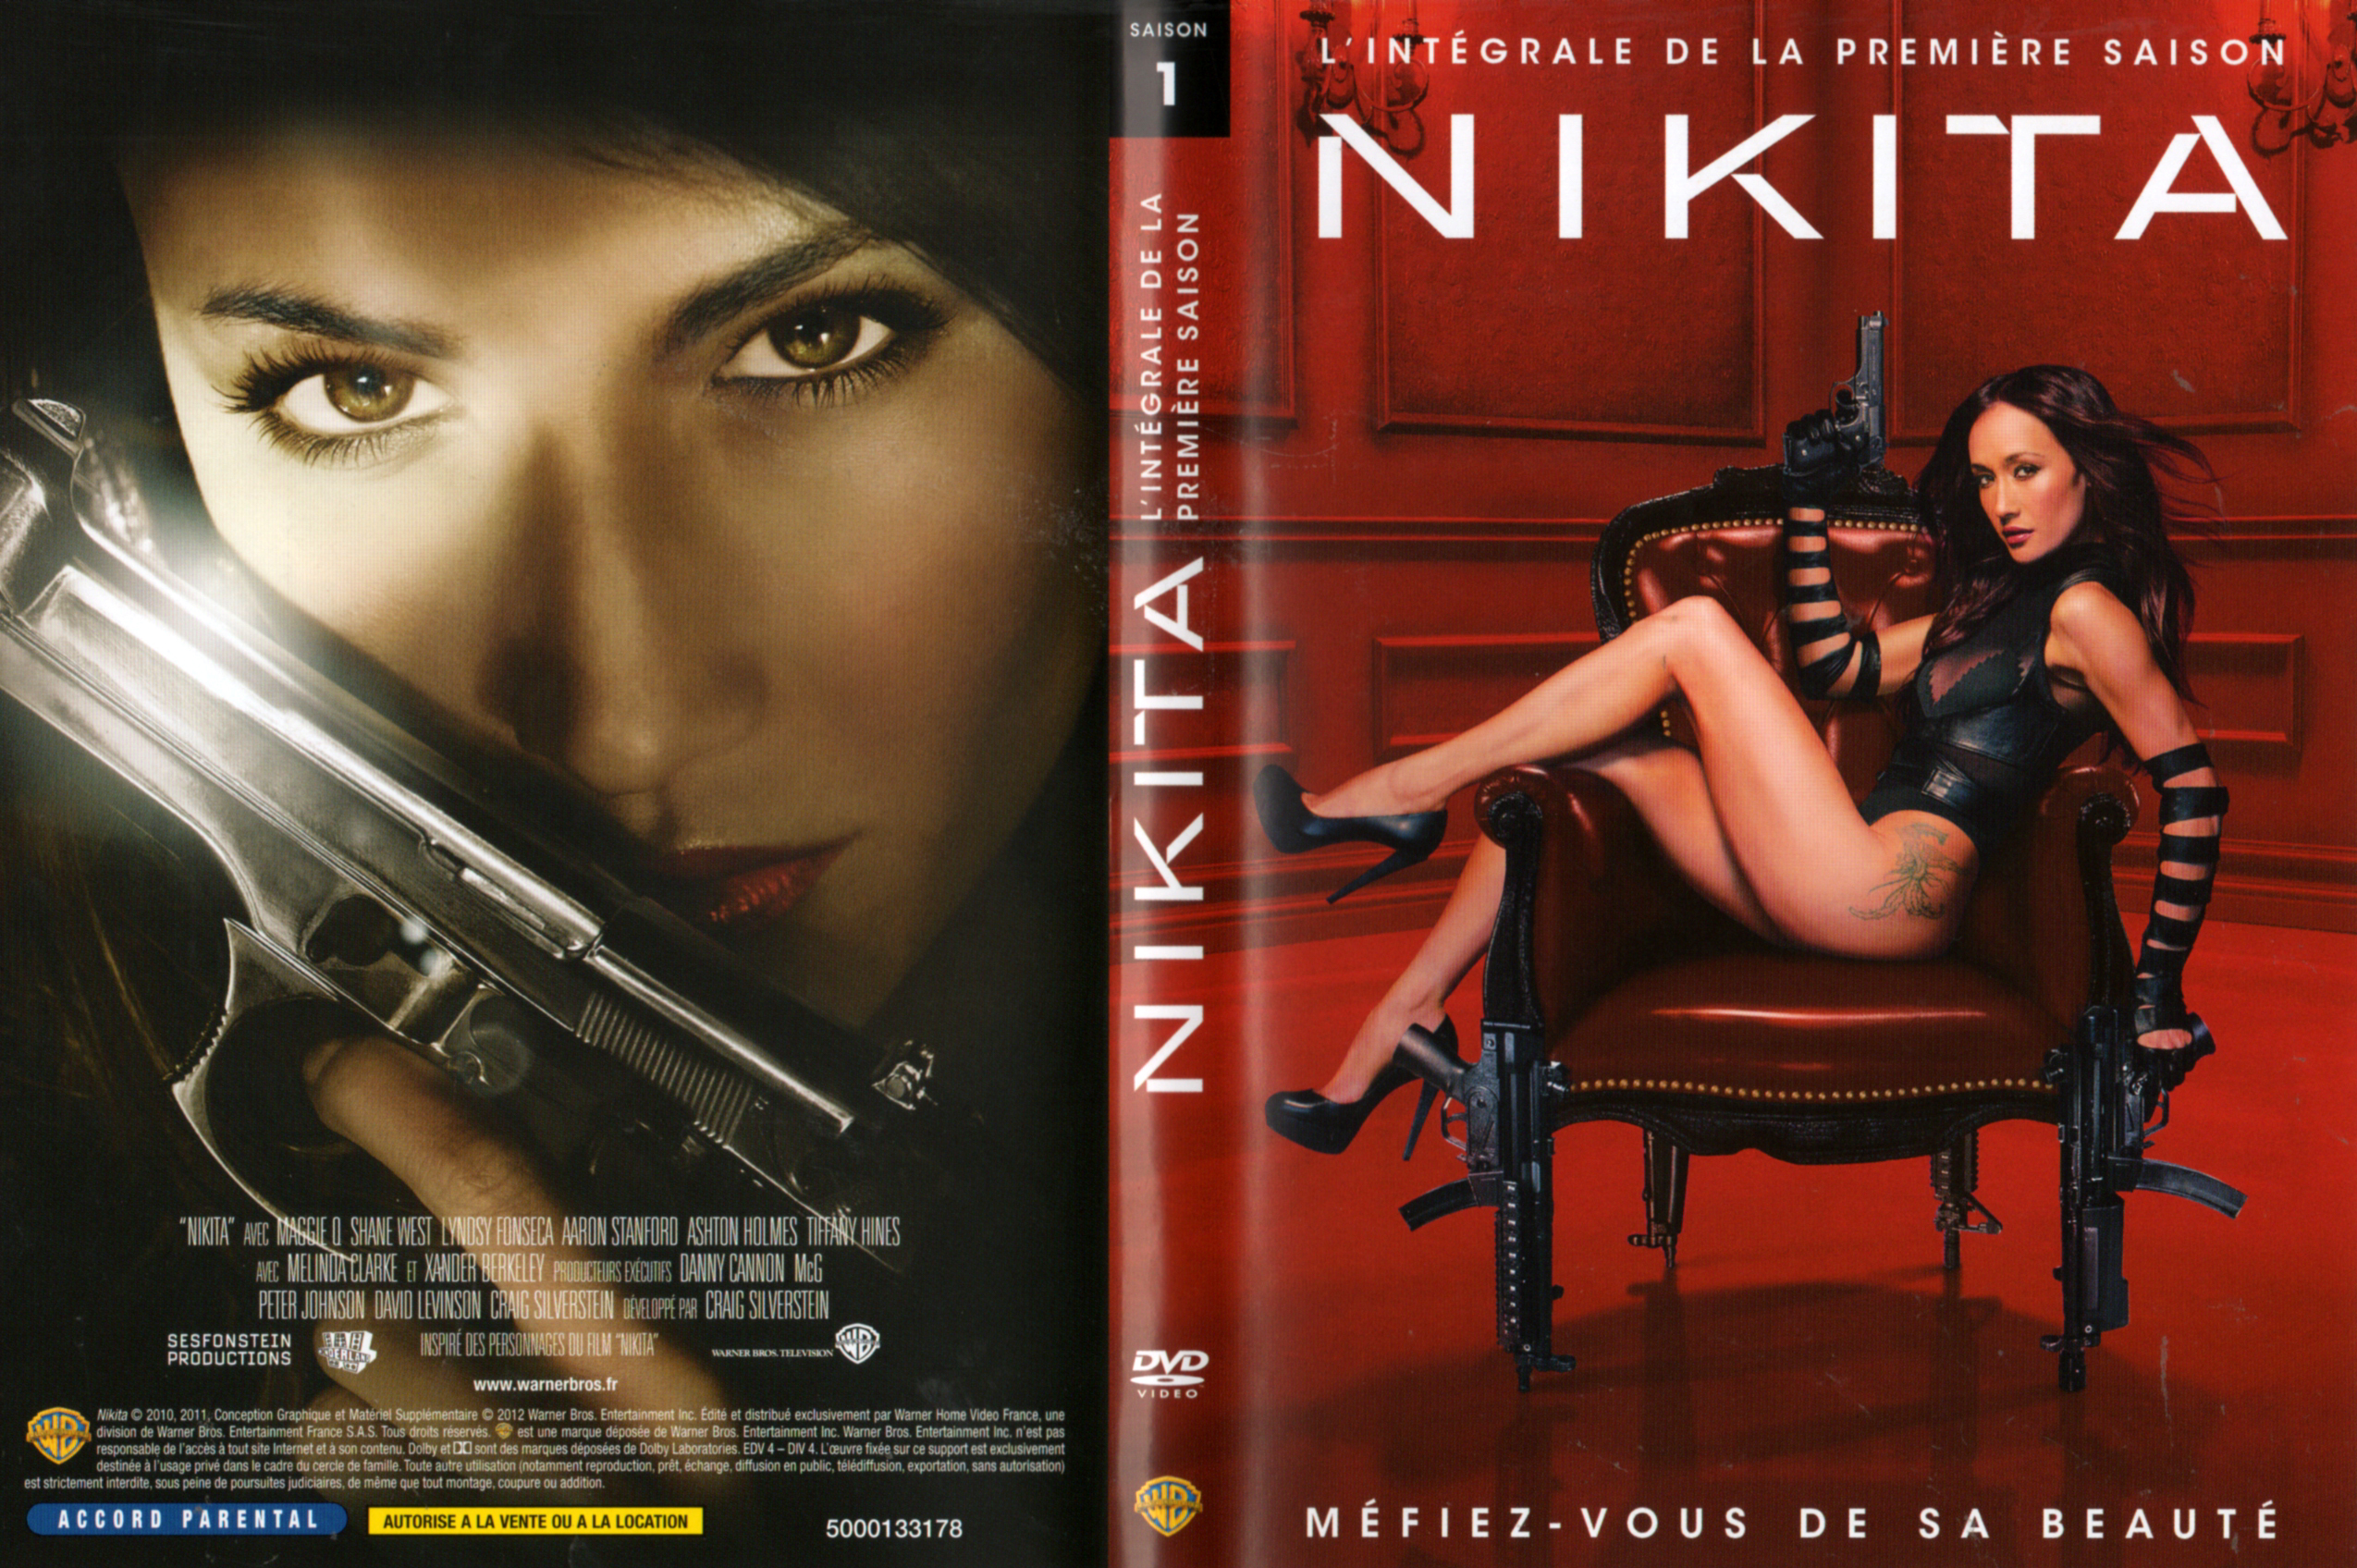 Jaquette DVD Nikita saison 1 v2